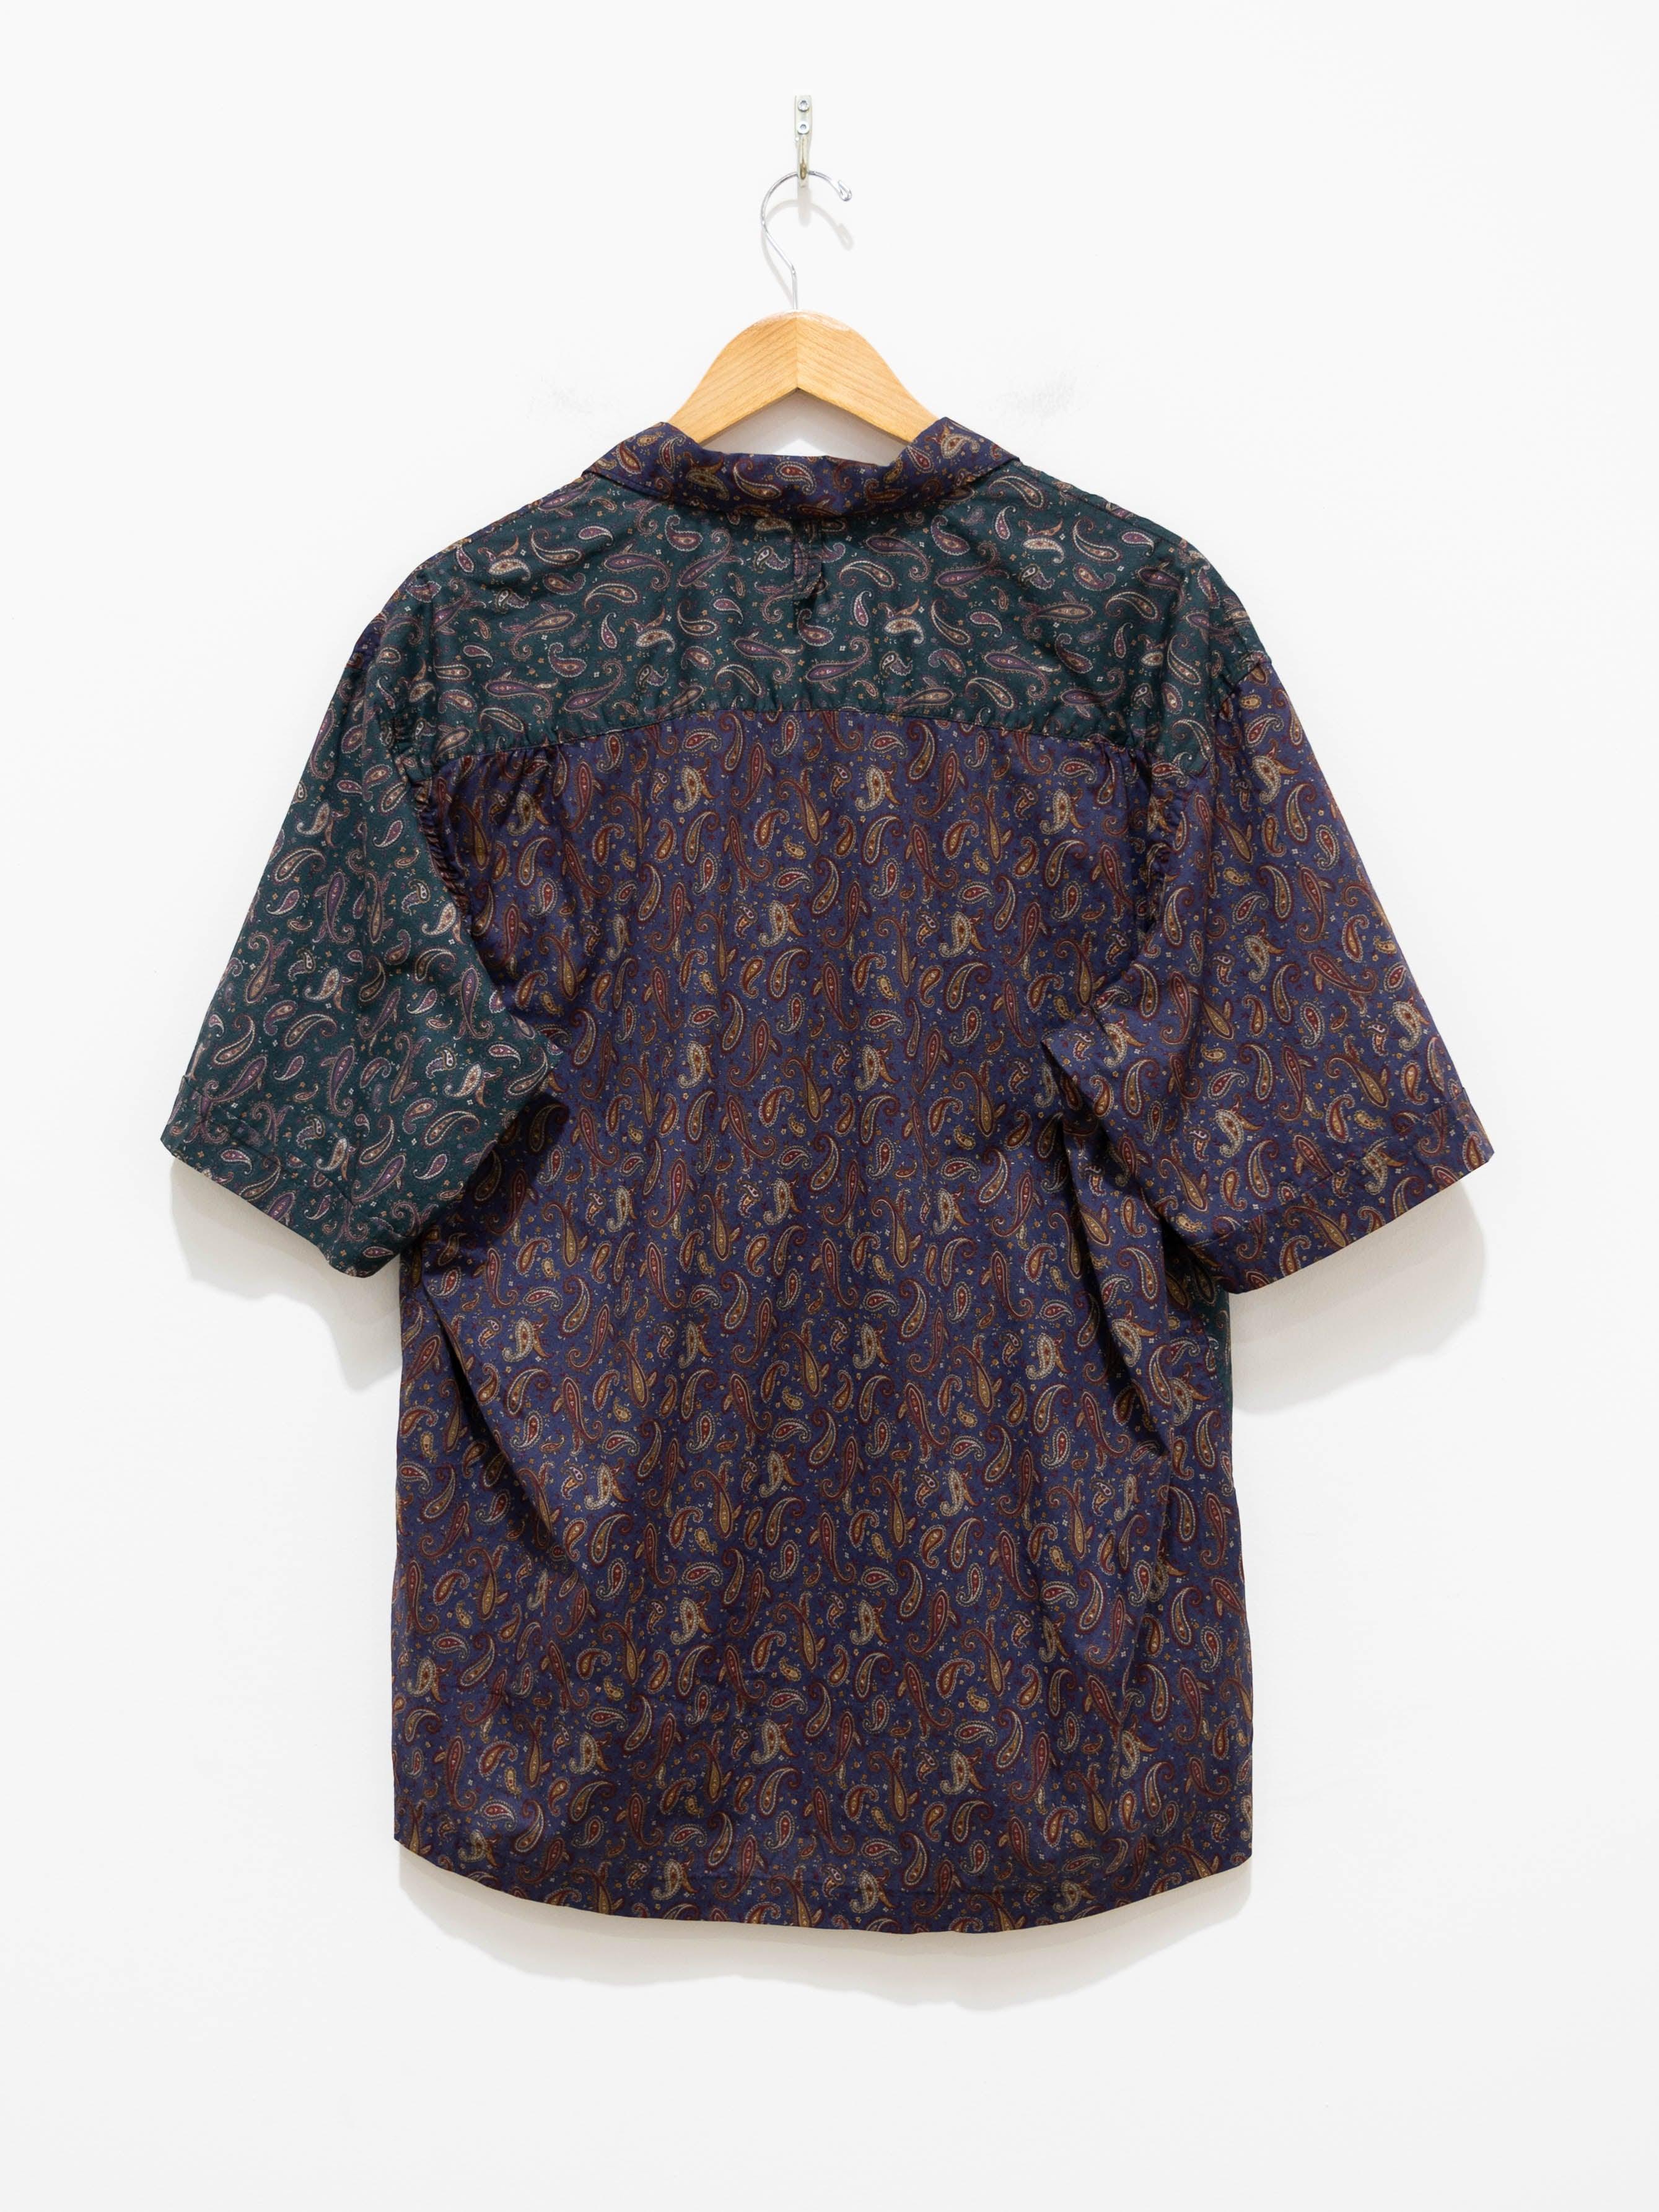 Namu Shop - Eastlogue Holiday Half Shirt - Multi Paisley